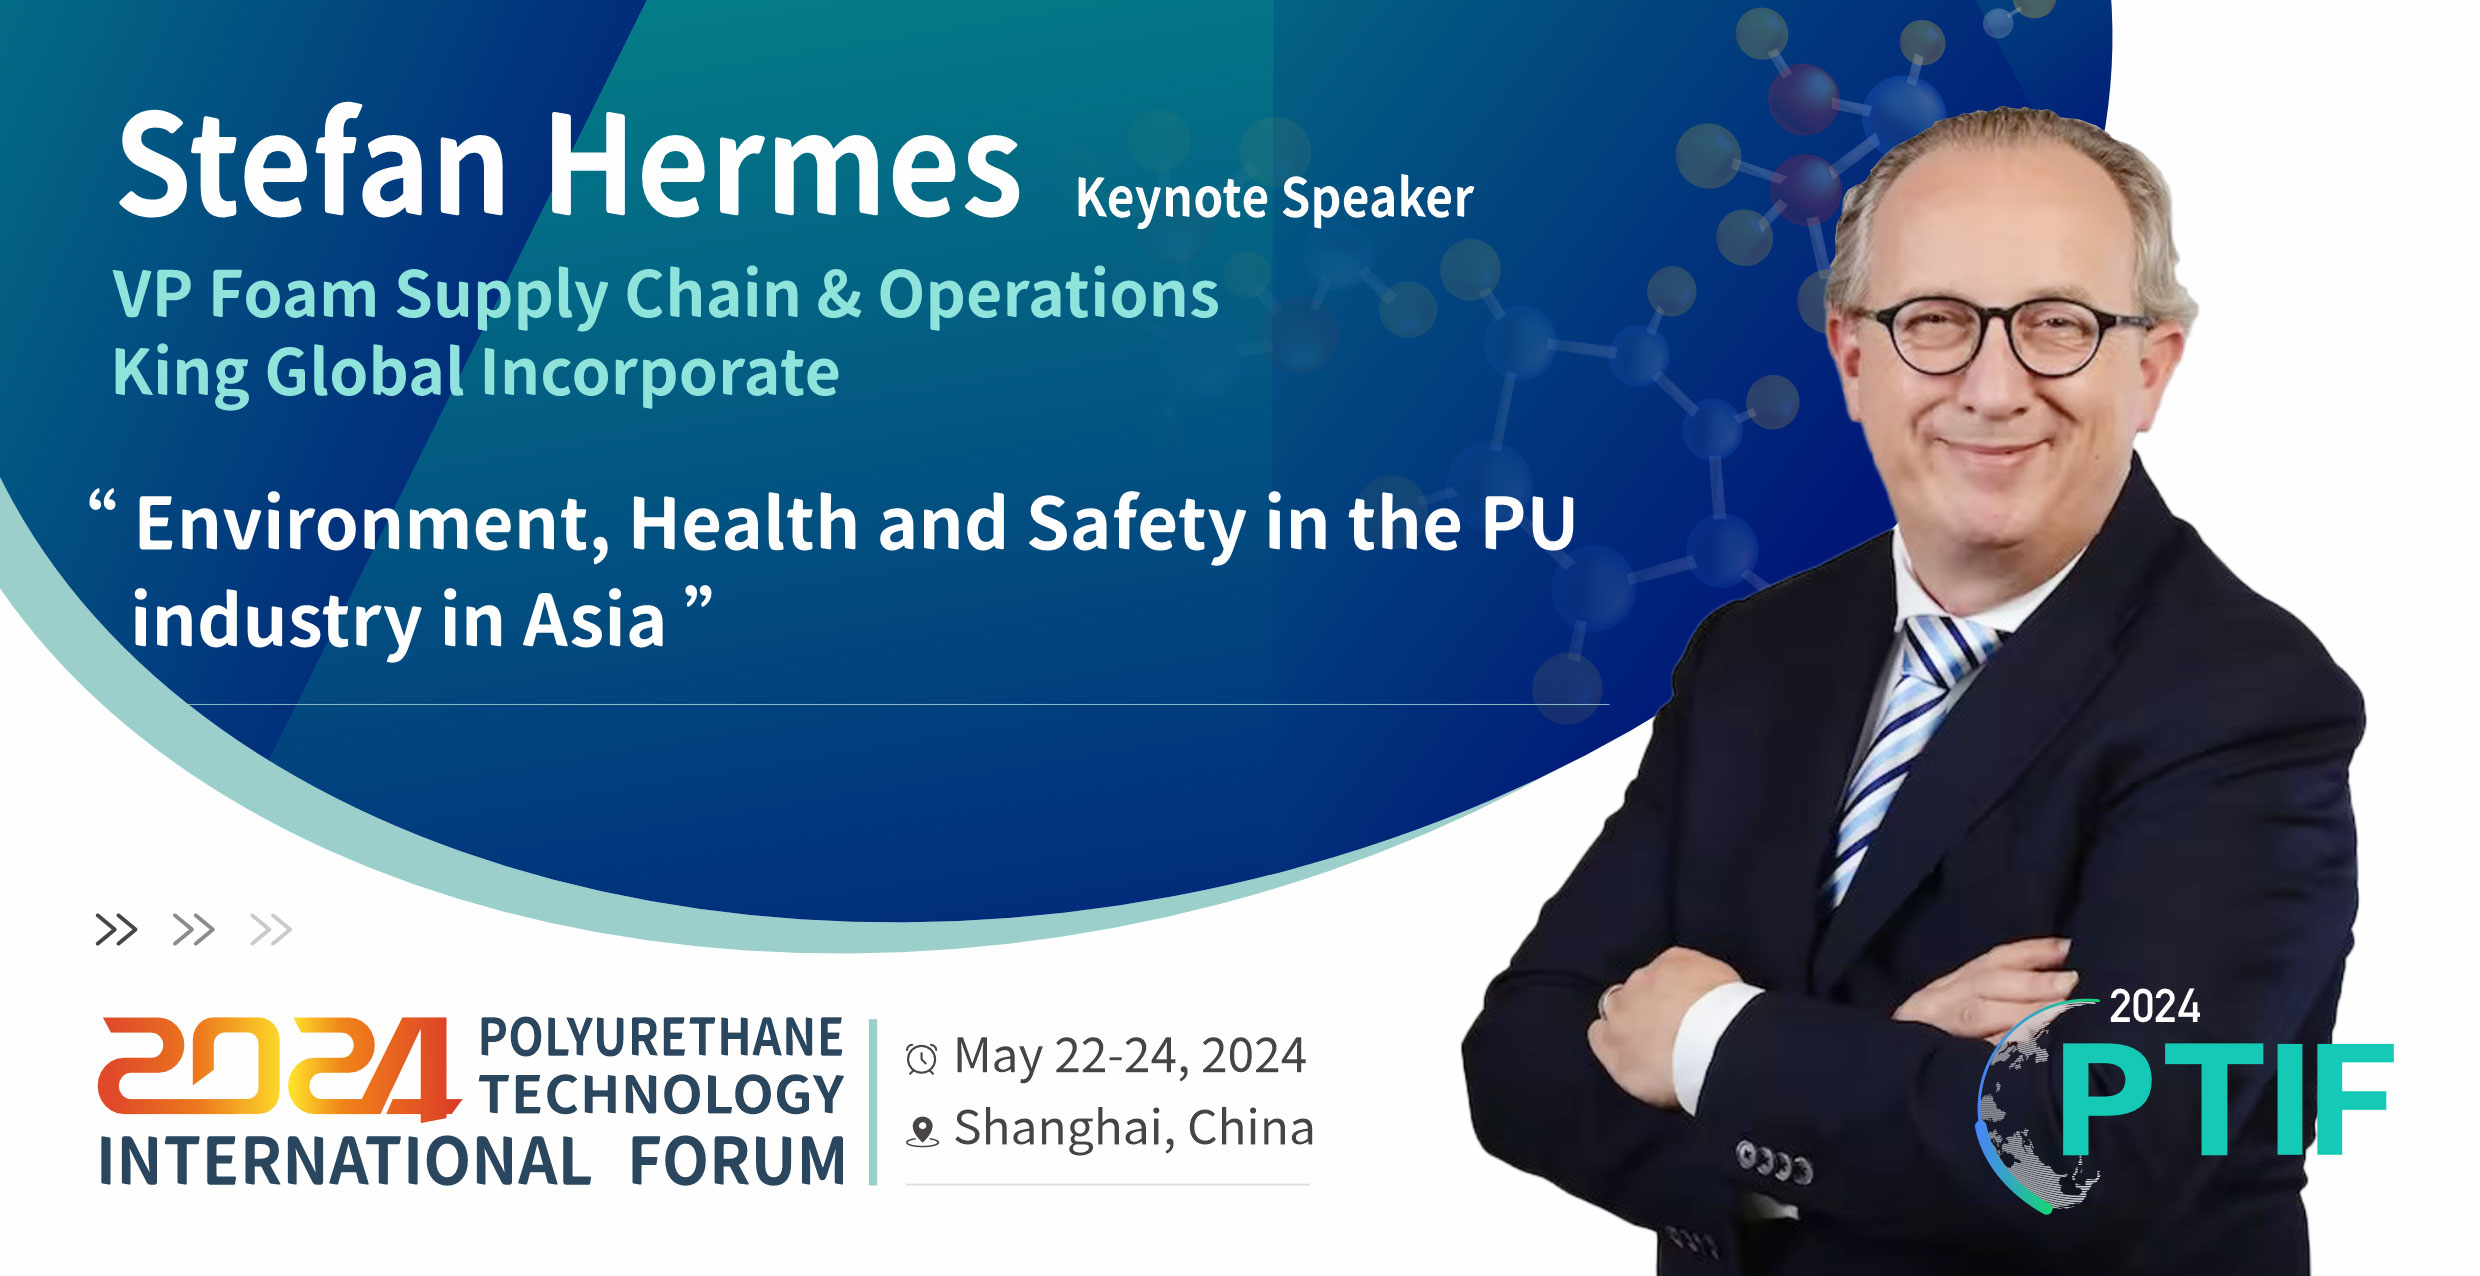 Polyurethane Technology International Forum 2024 to Welcome Keynote Speaker Stefan Hermes